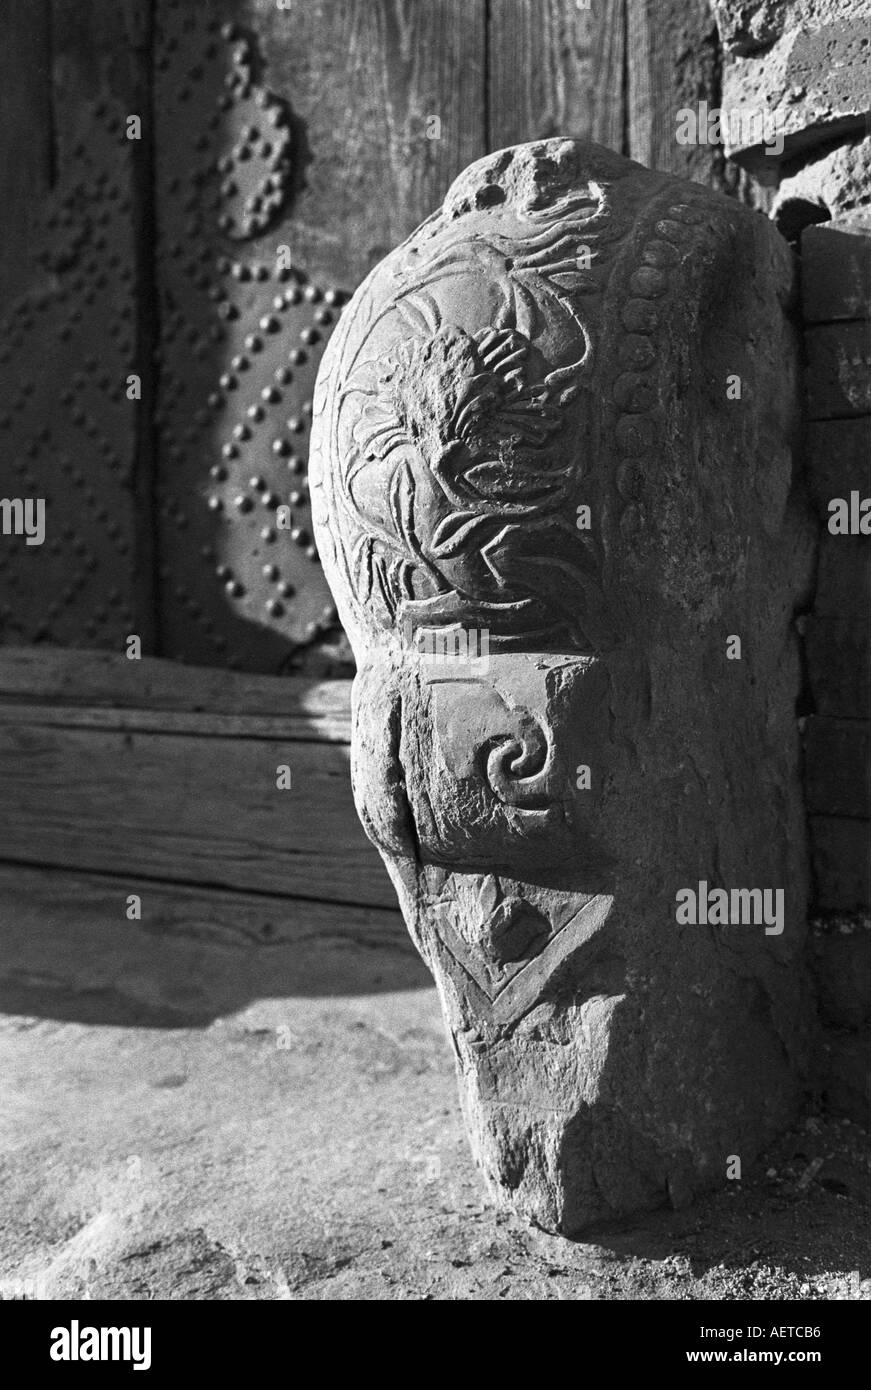 Detalle de una piedra tallada ornamental junto a una puerta en un hutong de Beijing 2003 China Foto de stock